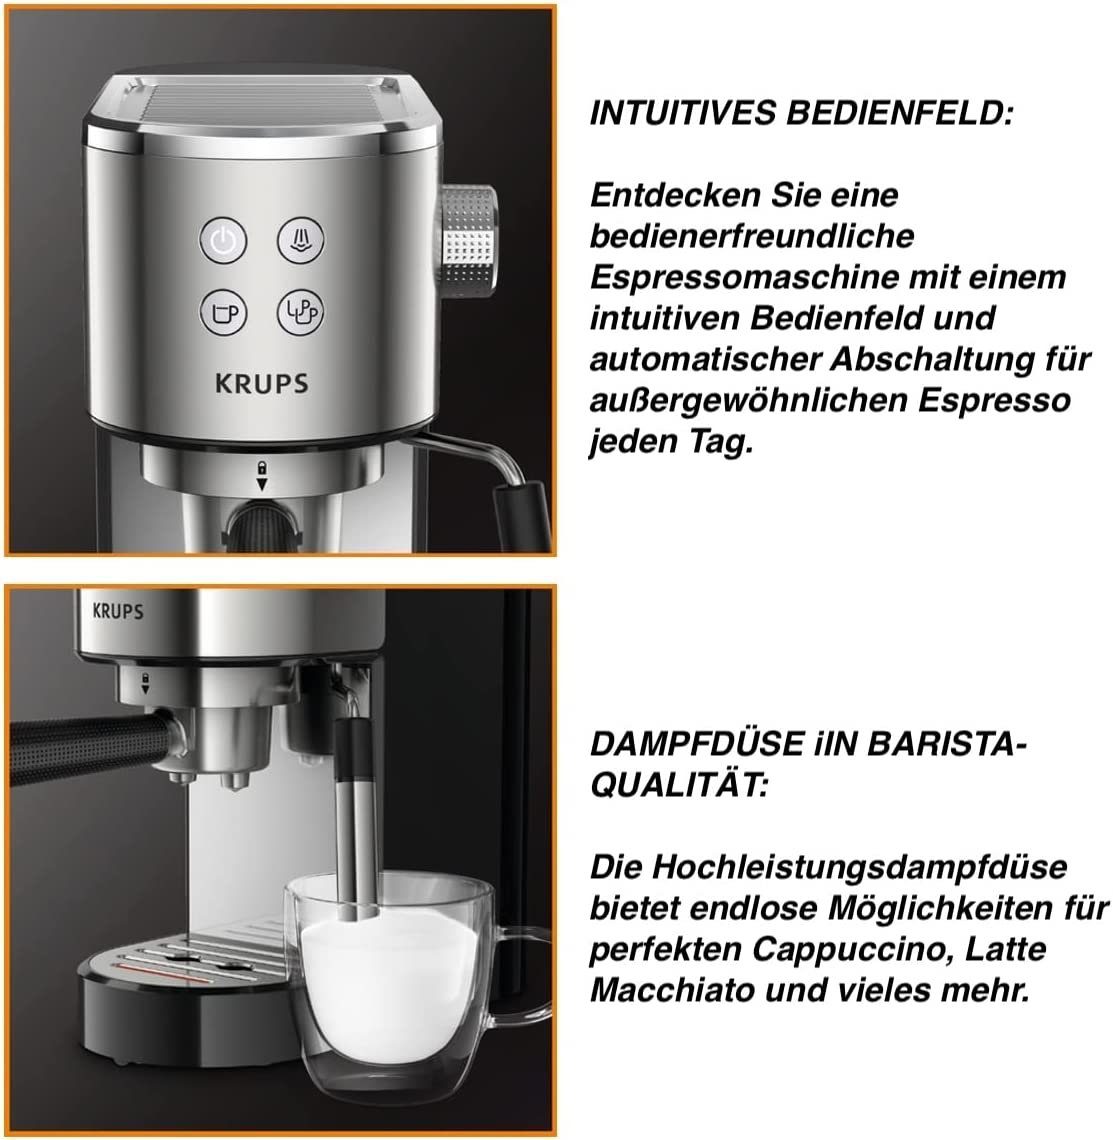 Krups Espressomaschine 1l Filtereinsatz Abschaltung, ESE 15 XP442C, automatischer Tamper, Milchschaumdüse + geeignet Kaffeepads Bar Kaffeekanne, Edelstahl